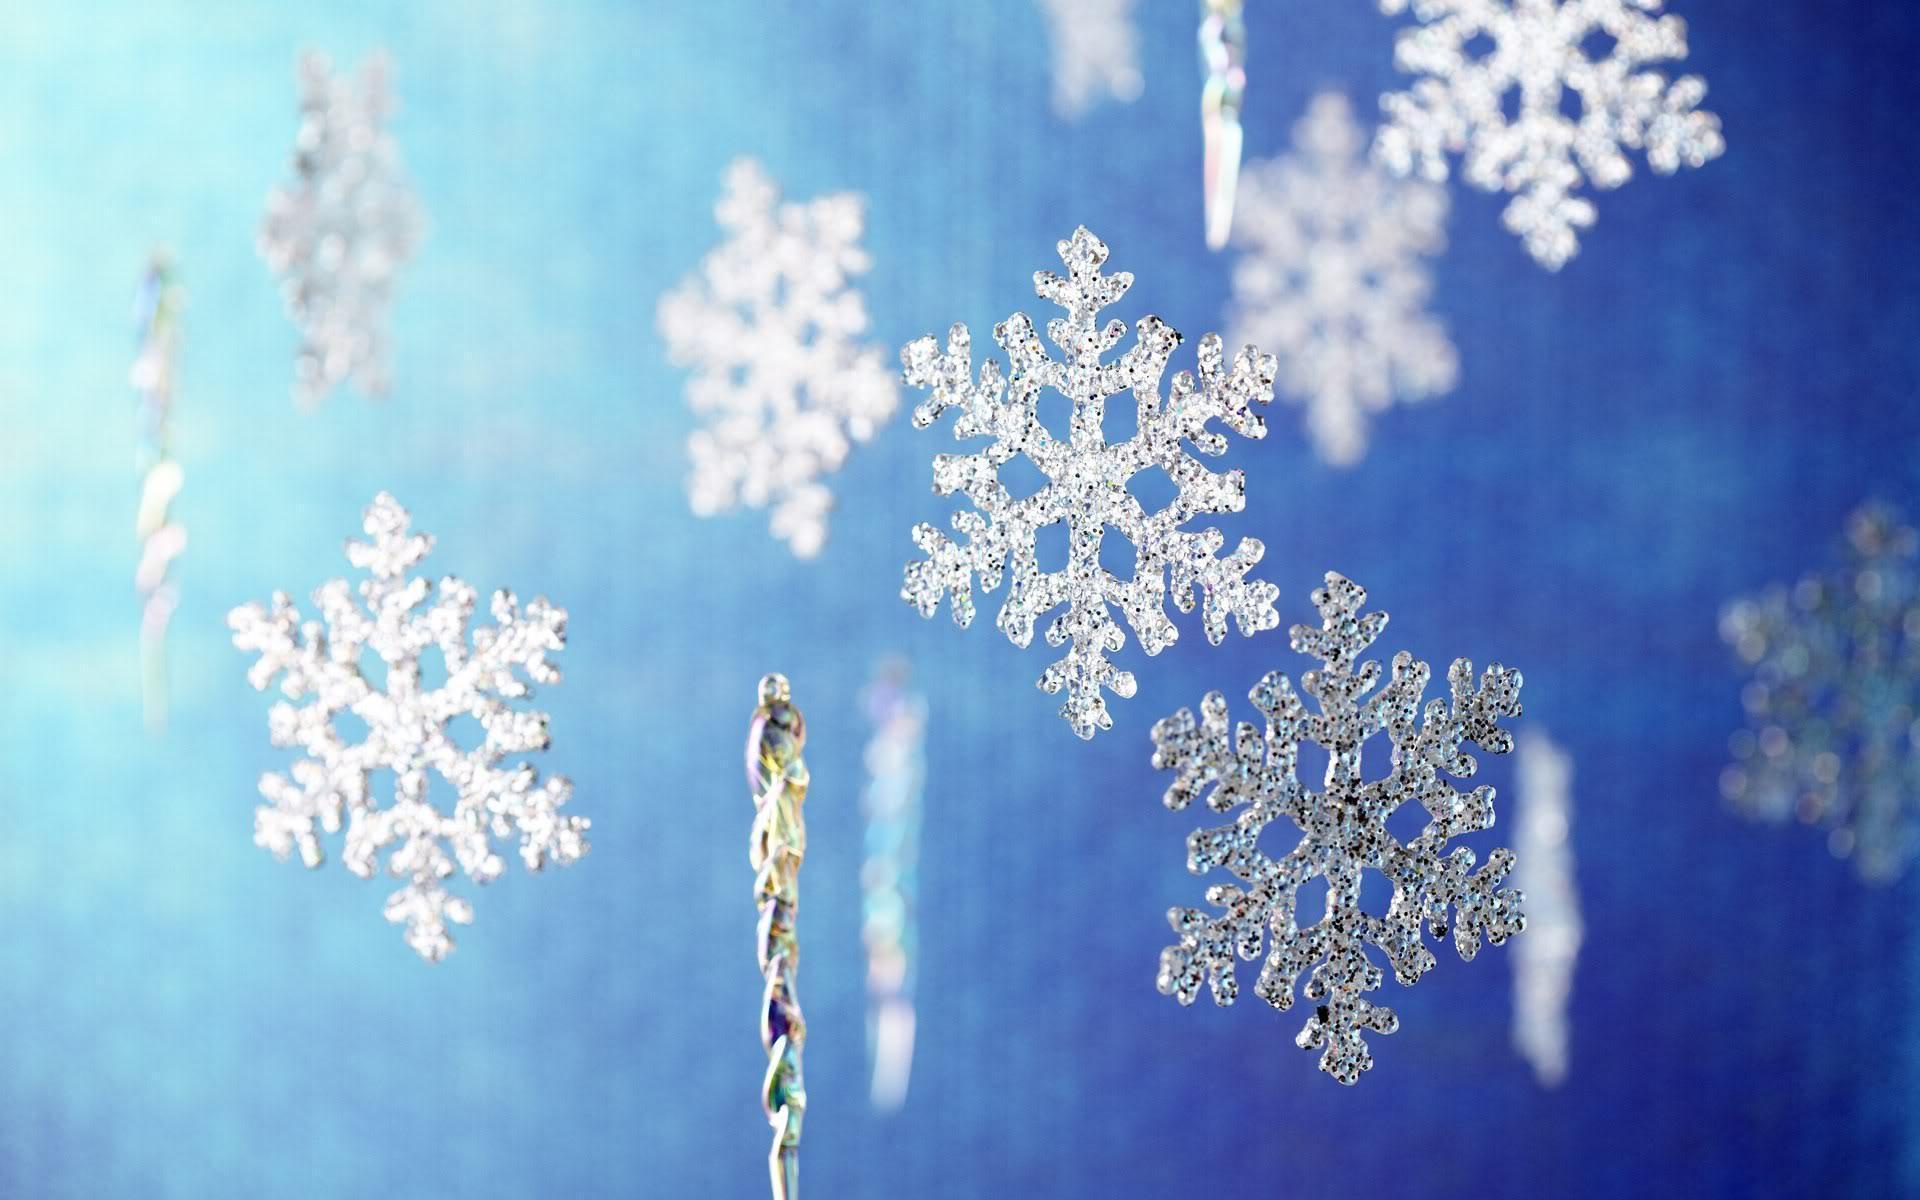 Snowflake wallpaper free desktop background wallpaper image